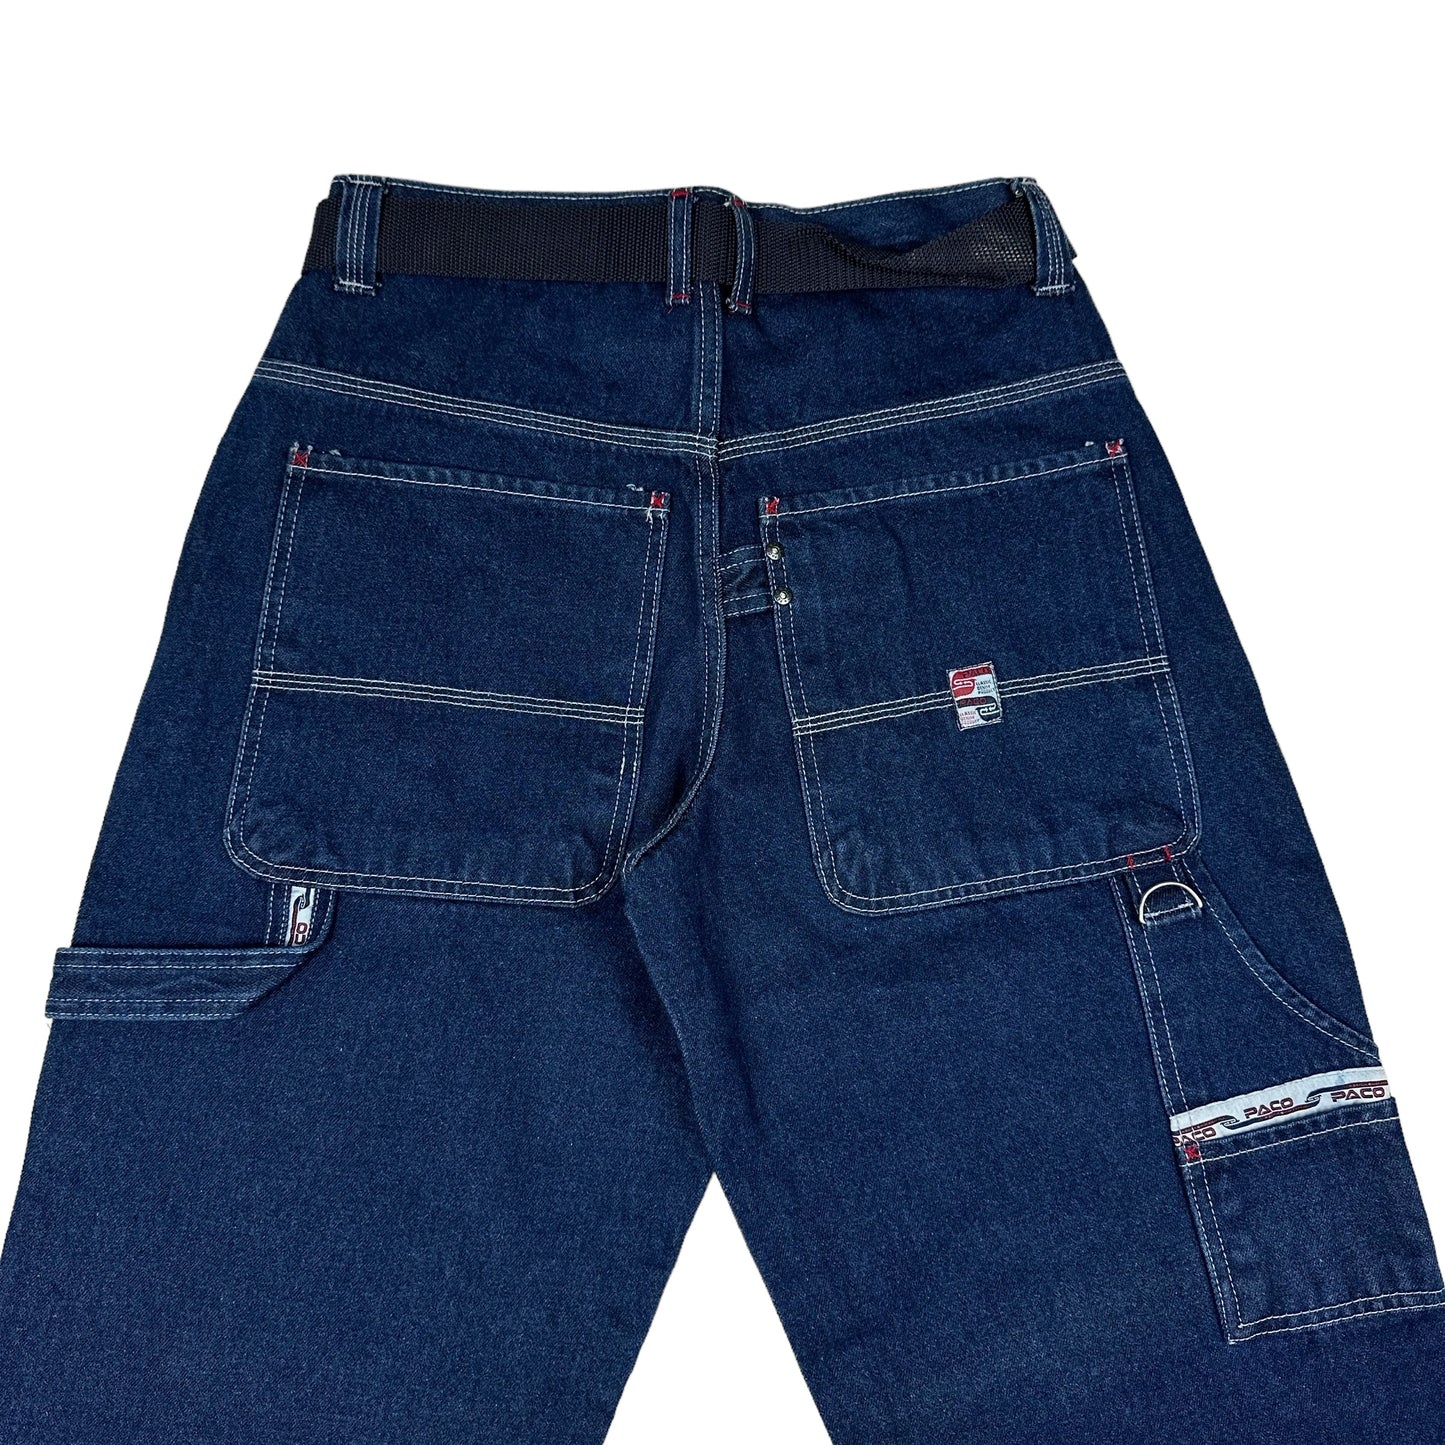 Vintage Y2K Paco Jeans Blue Carpenter Pants with Belt